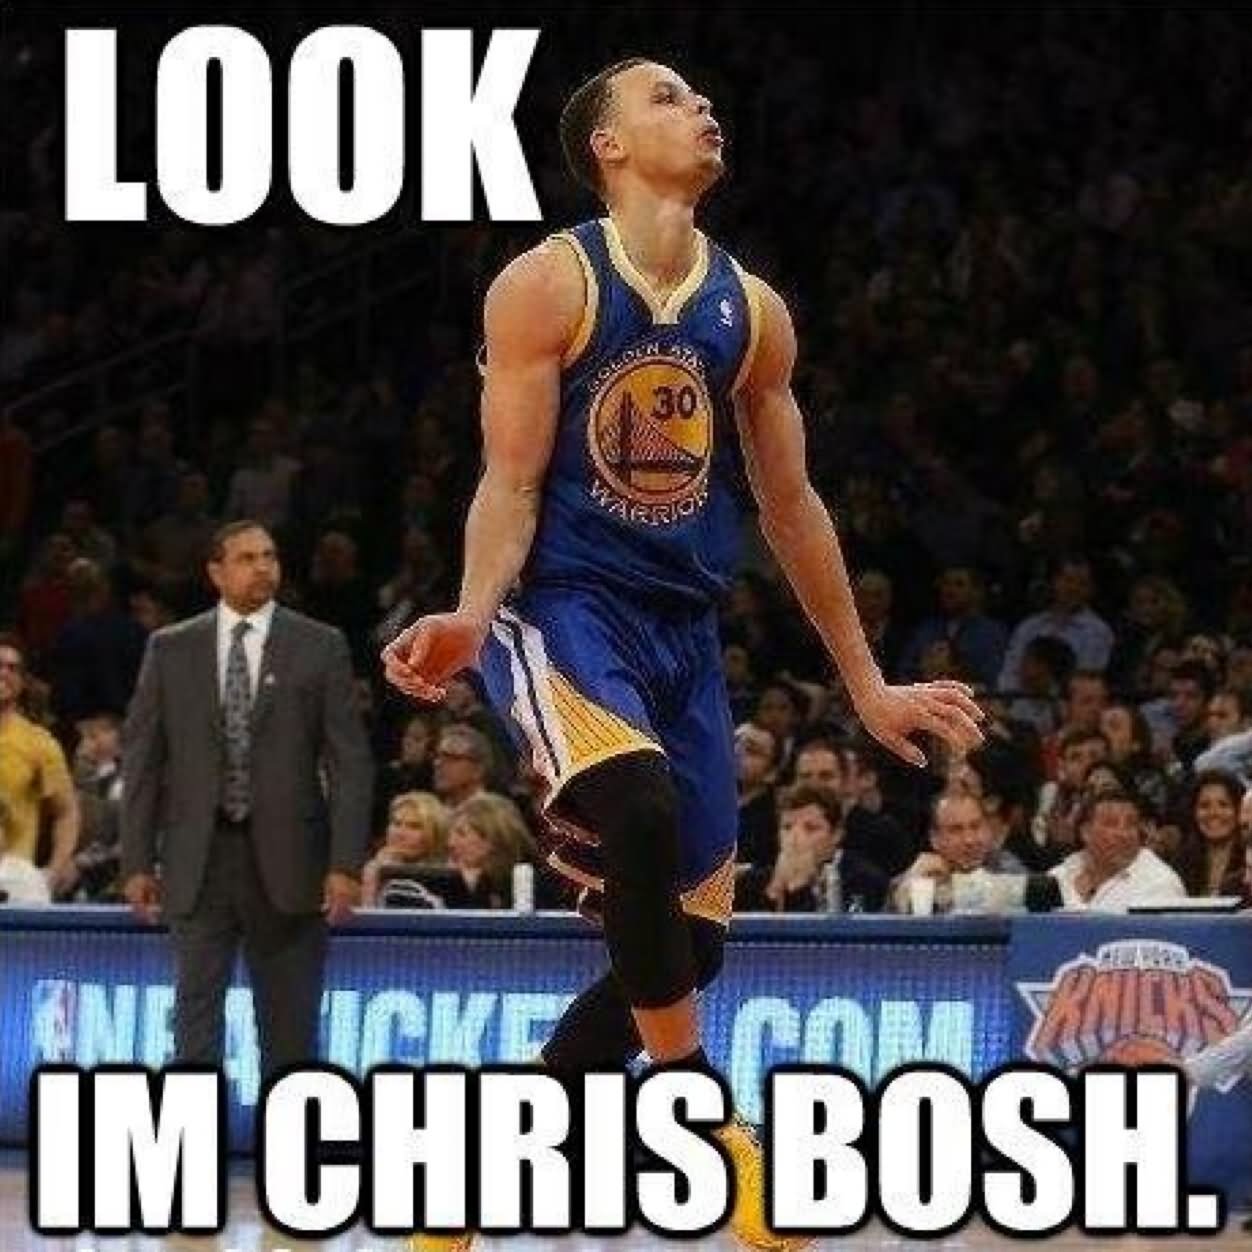 Look I Am Chris Bosh Funny Sports Meme Picture